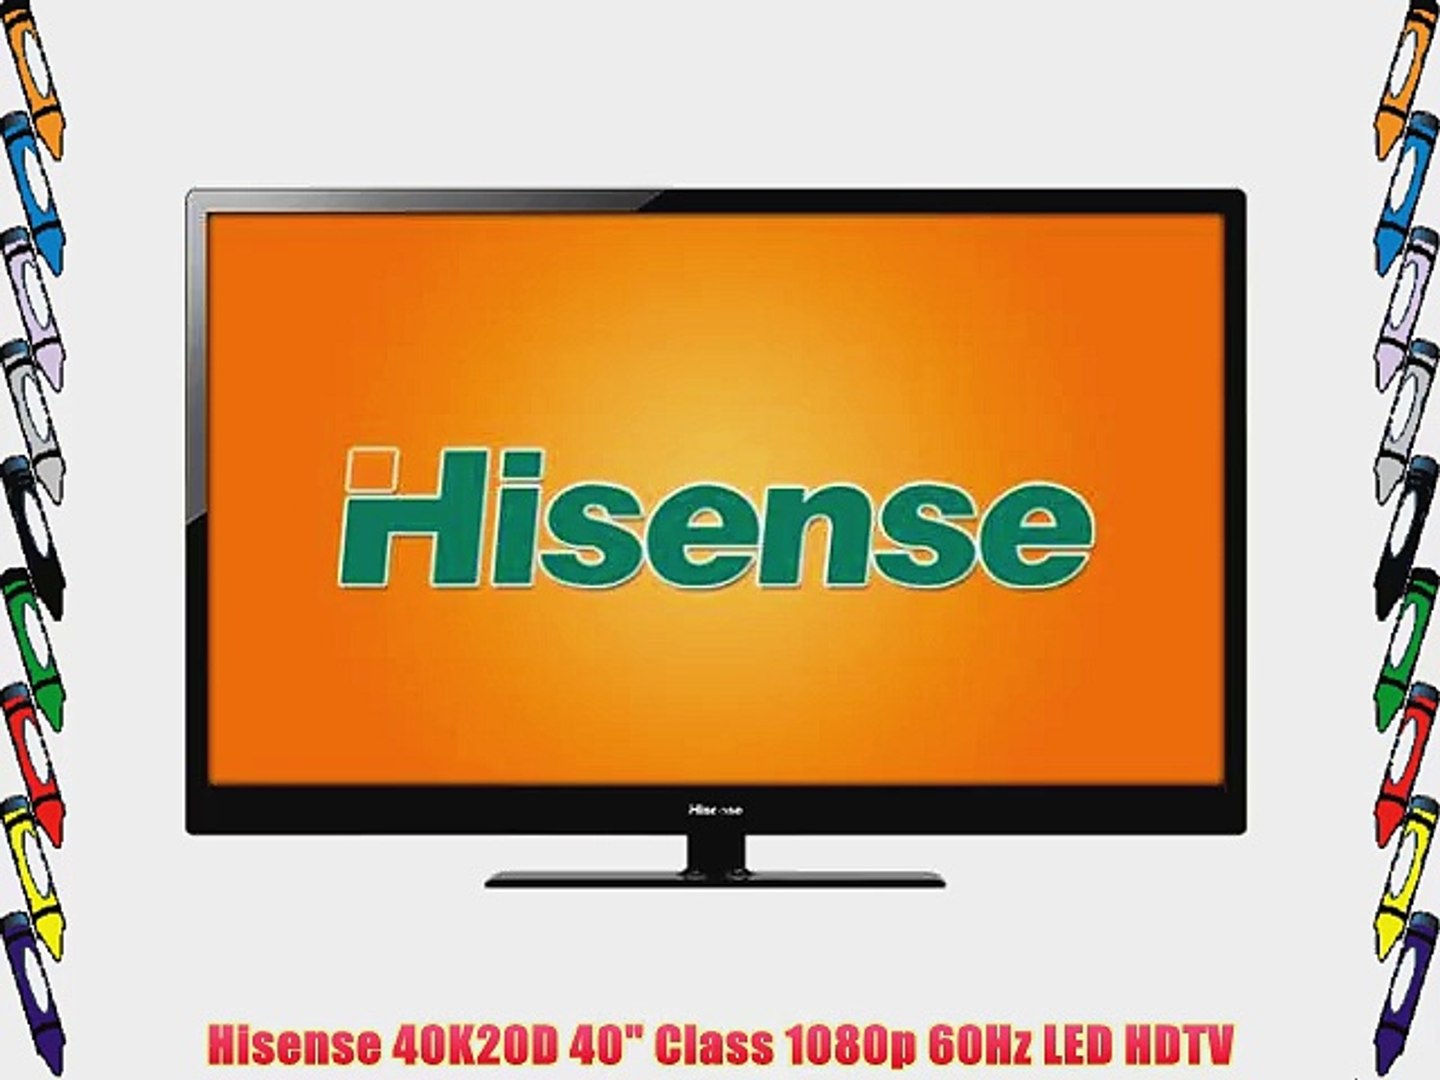 Hisense 40K20D 40 Class 1080p 60Hz LED HDTV - video Dailymotion